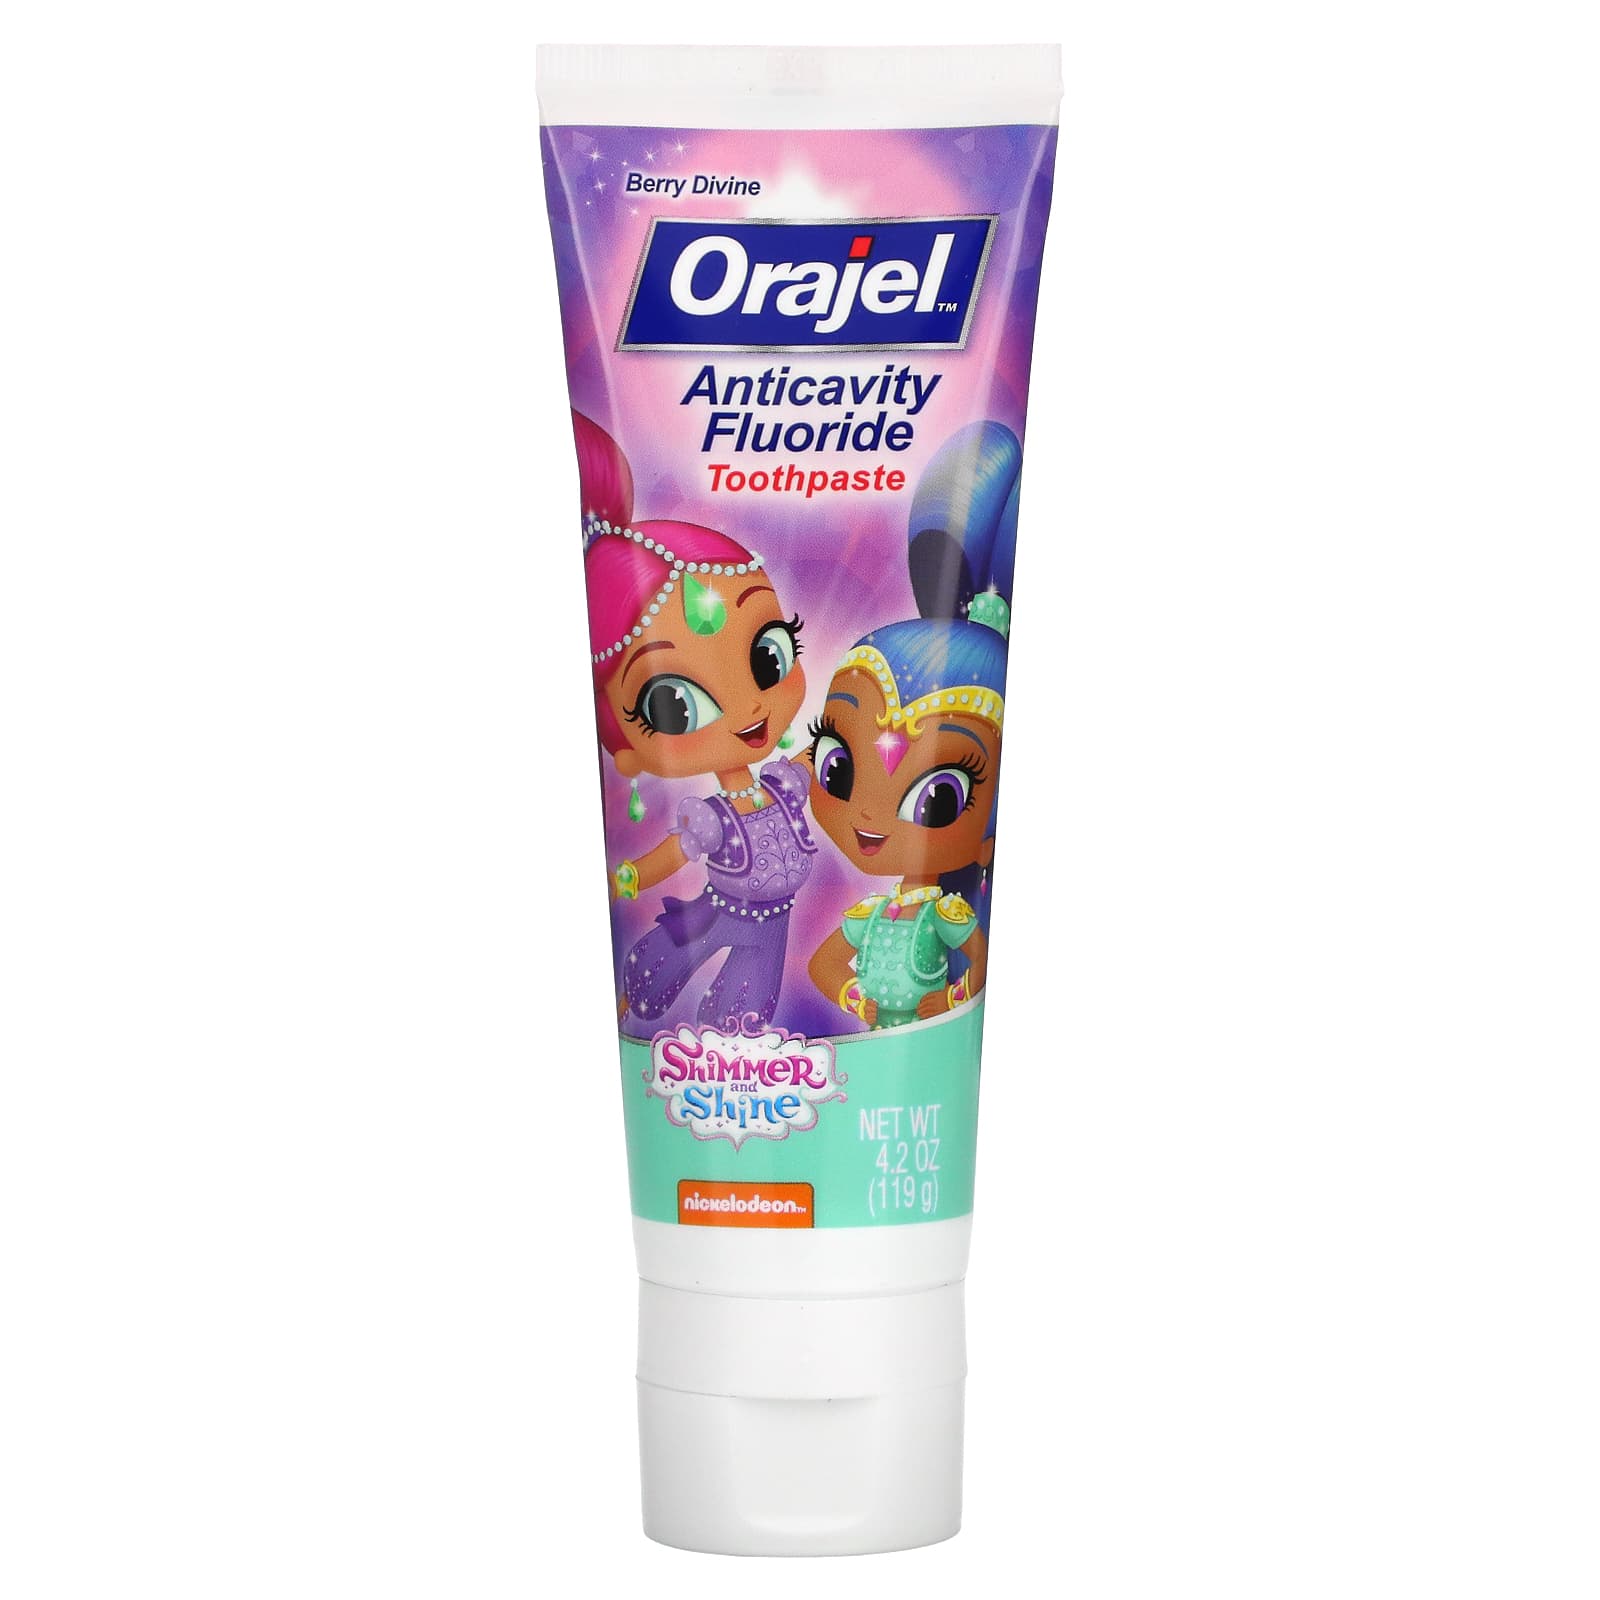 Orajel, Shimmer & Shine Anticavity Fluoride Toothpaste, Berry Divine (119 g)